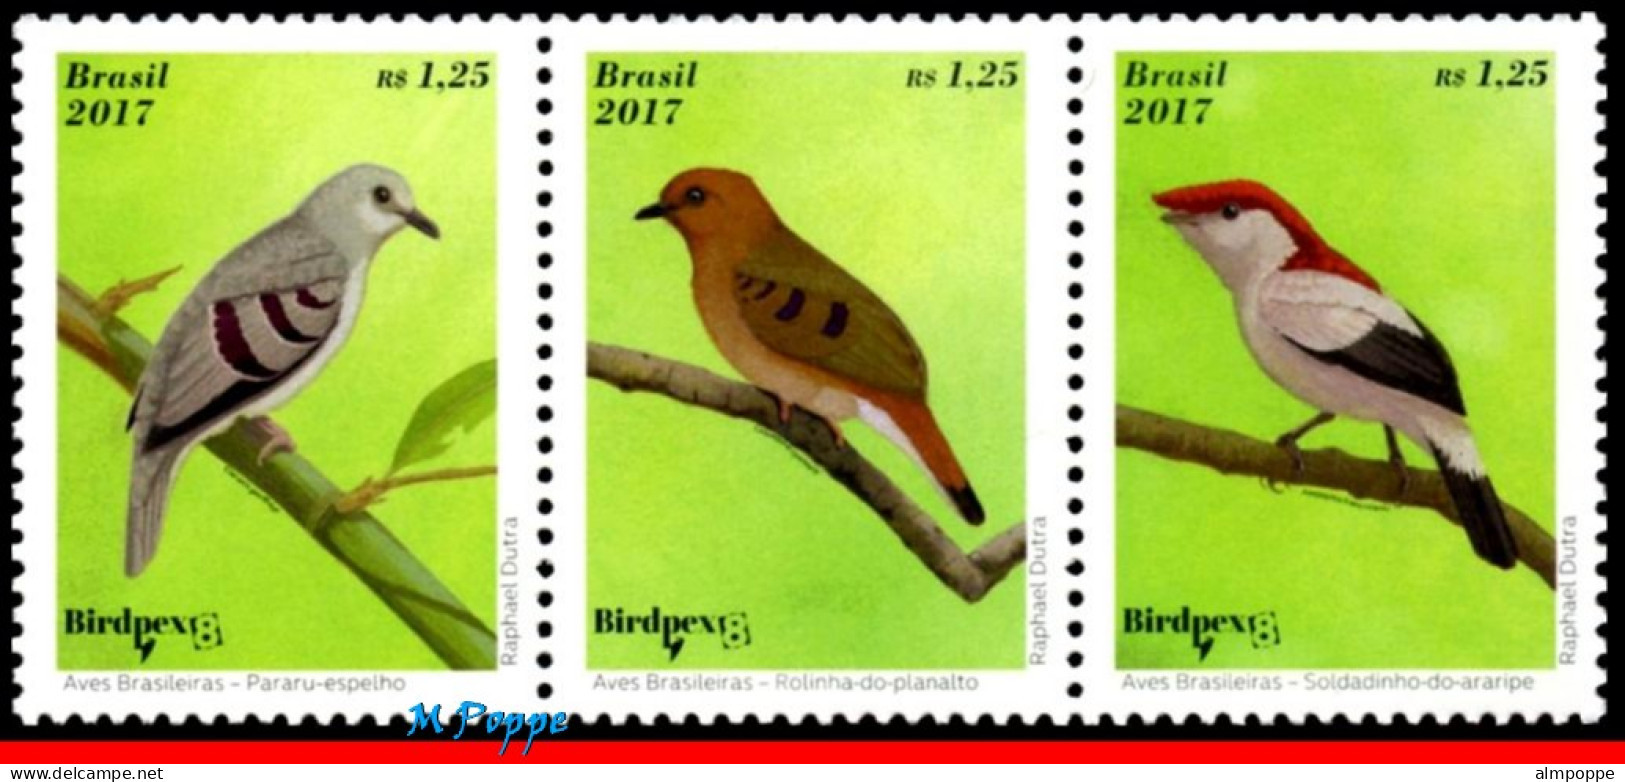 Ref. BR-V2017-04-4 BRAZIL 2017 - BRAZILIAN BIRDS,BIRDPEX 8, ENDANGERED, SHEET MNH, BIRDS 15V - Blocchi & Foglietti